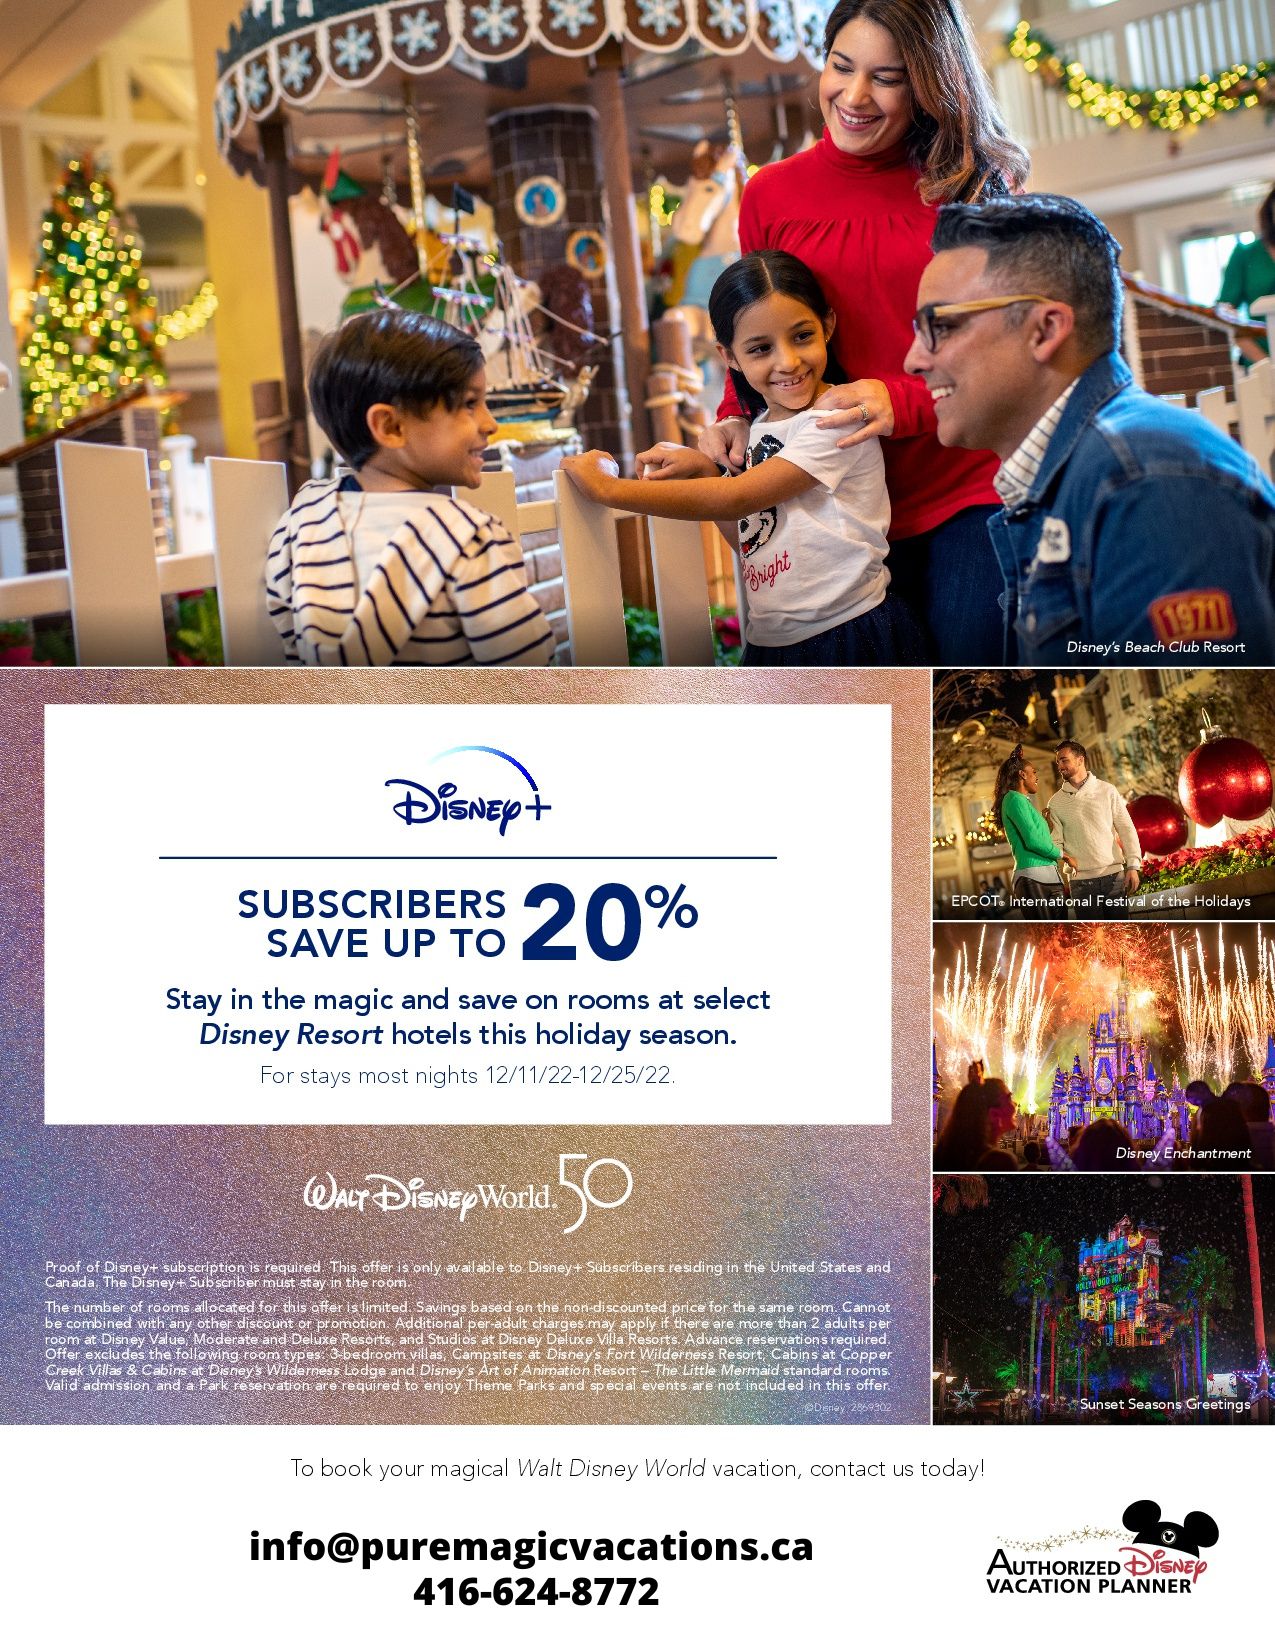 Walt Disney World - Disney+ Subscribers save up to 20%